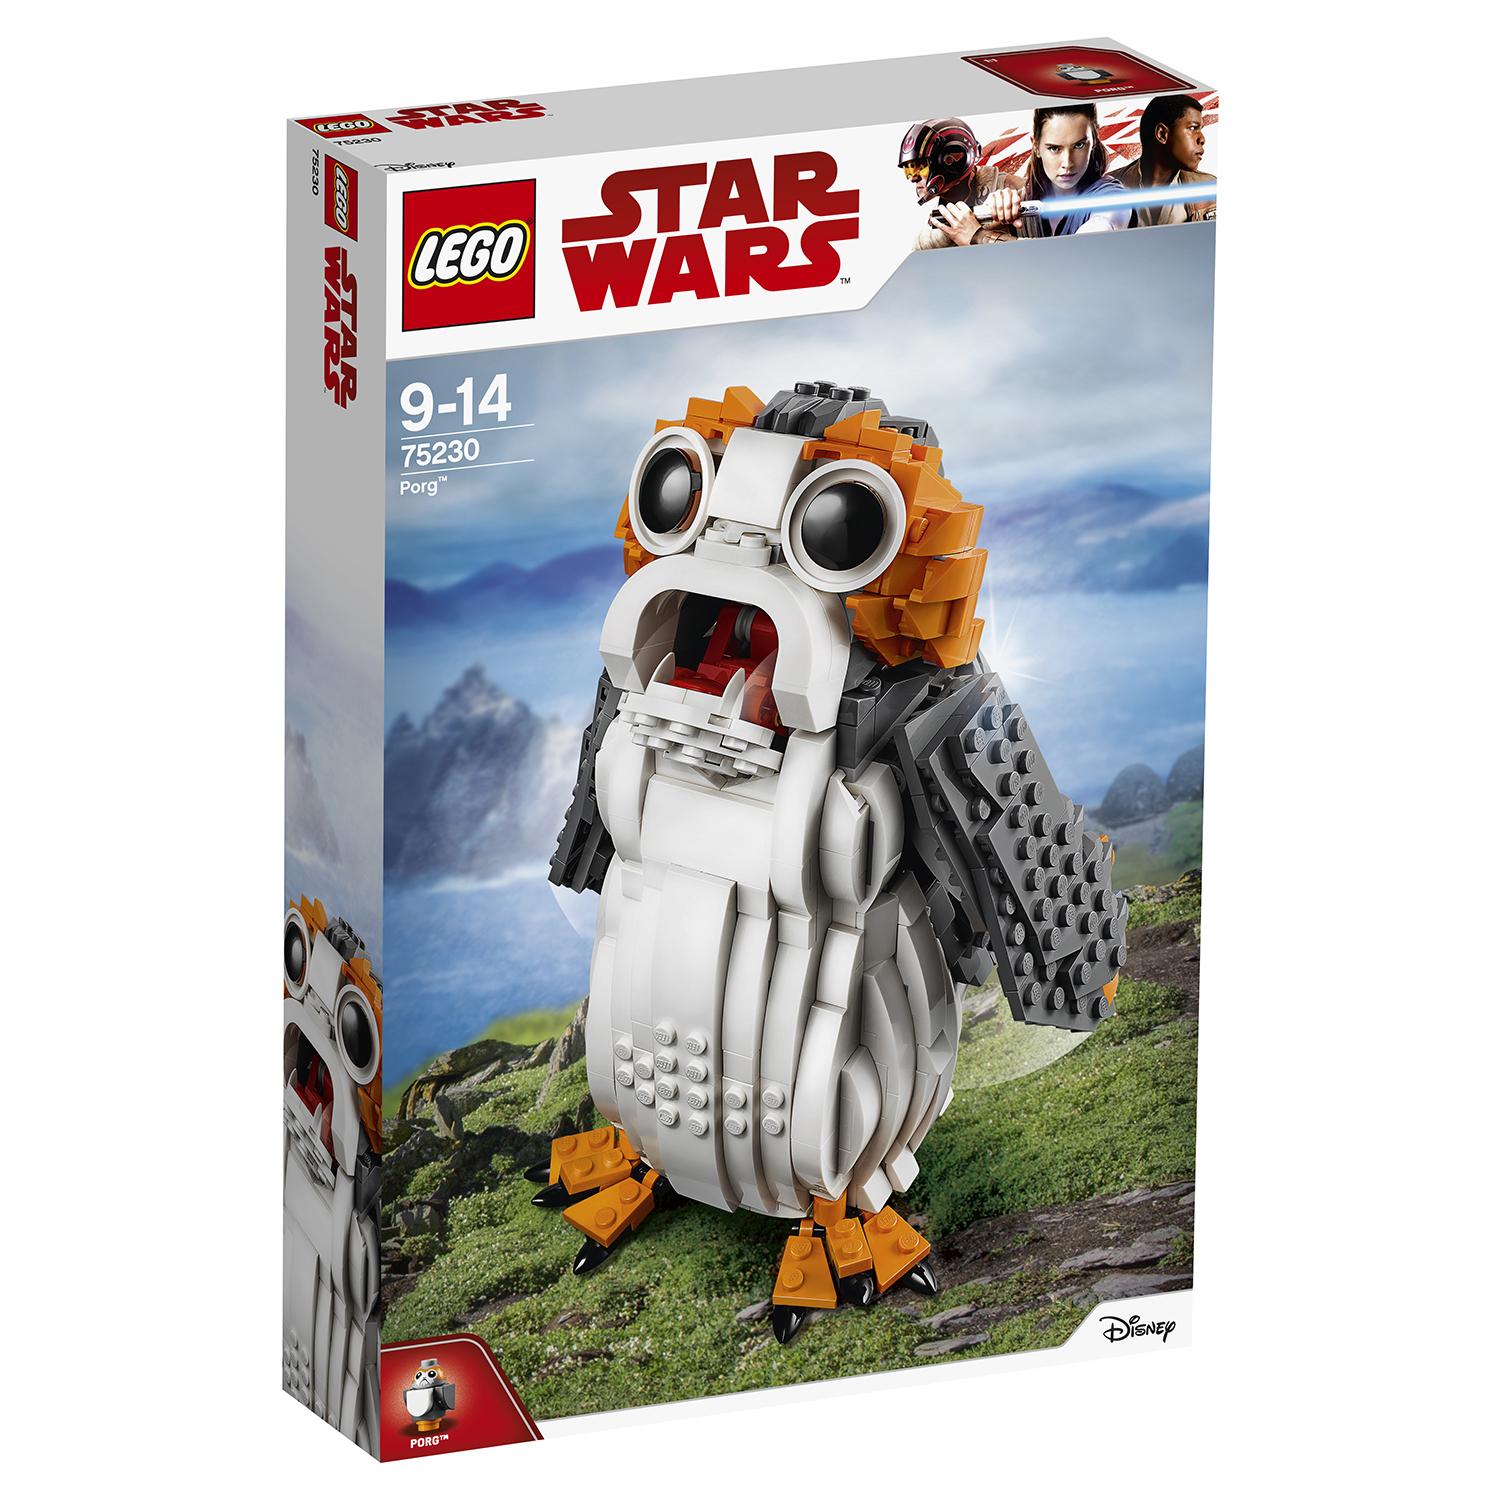 Lego Star Wars 75230 Порг